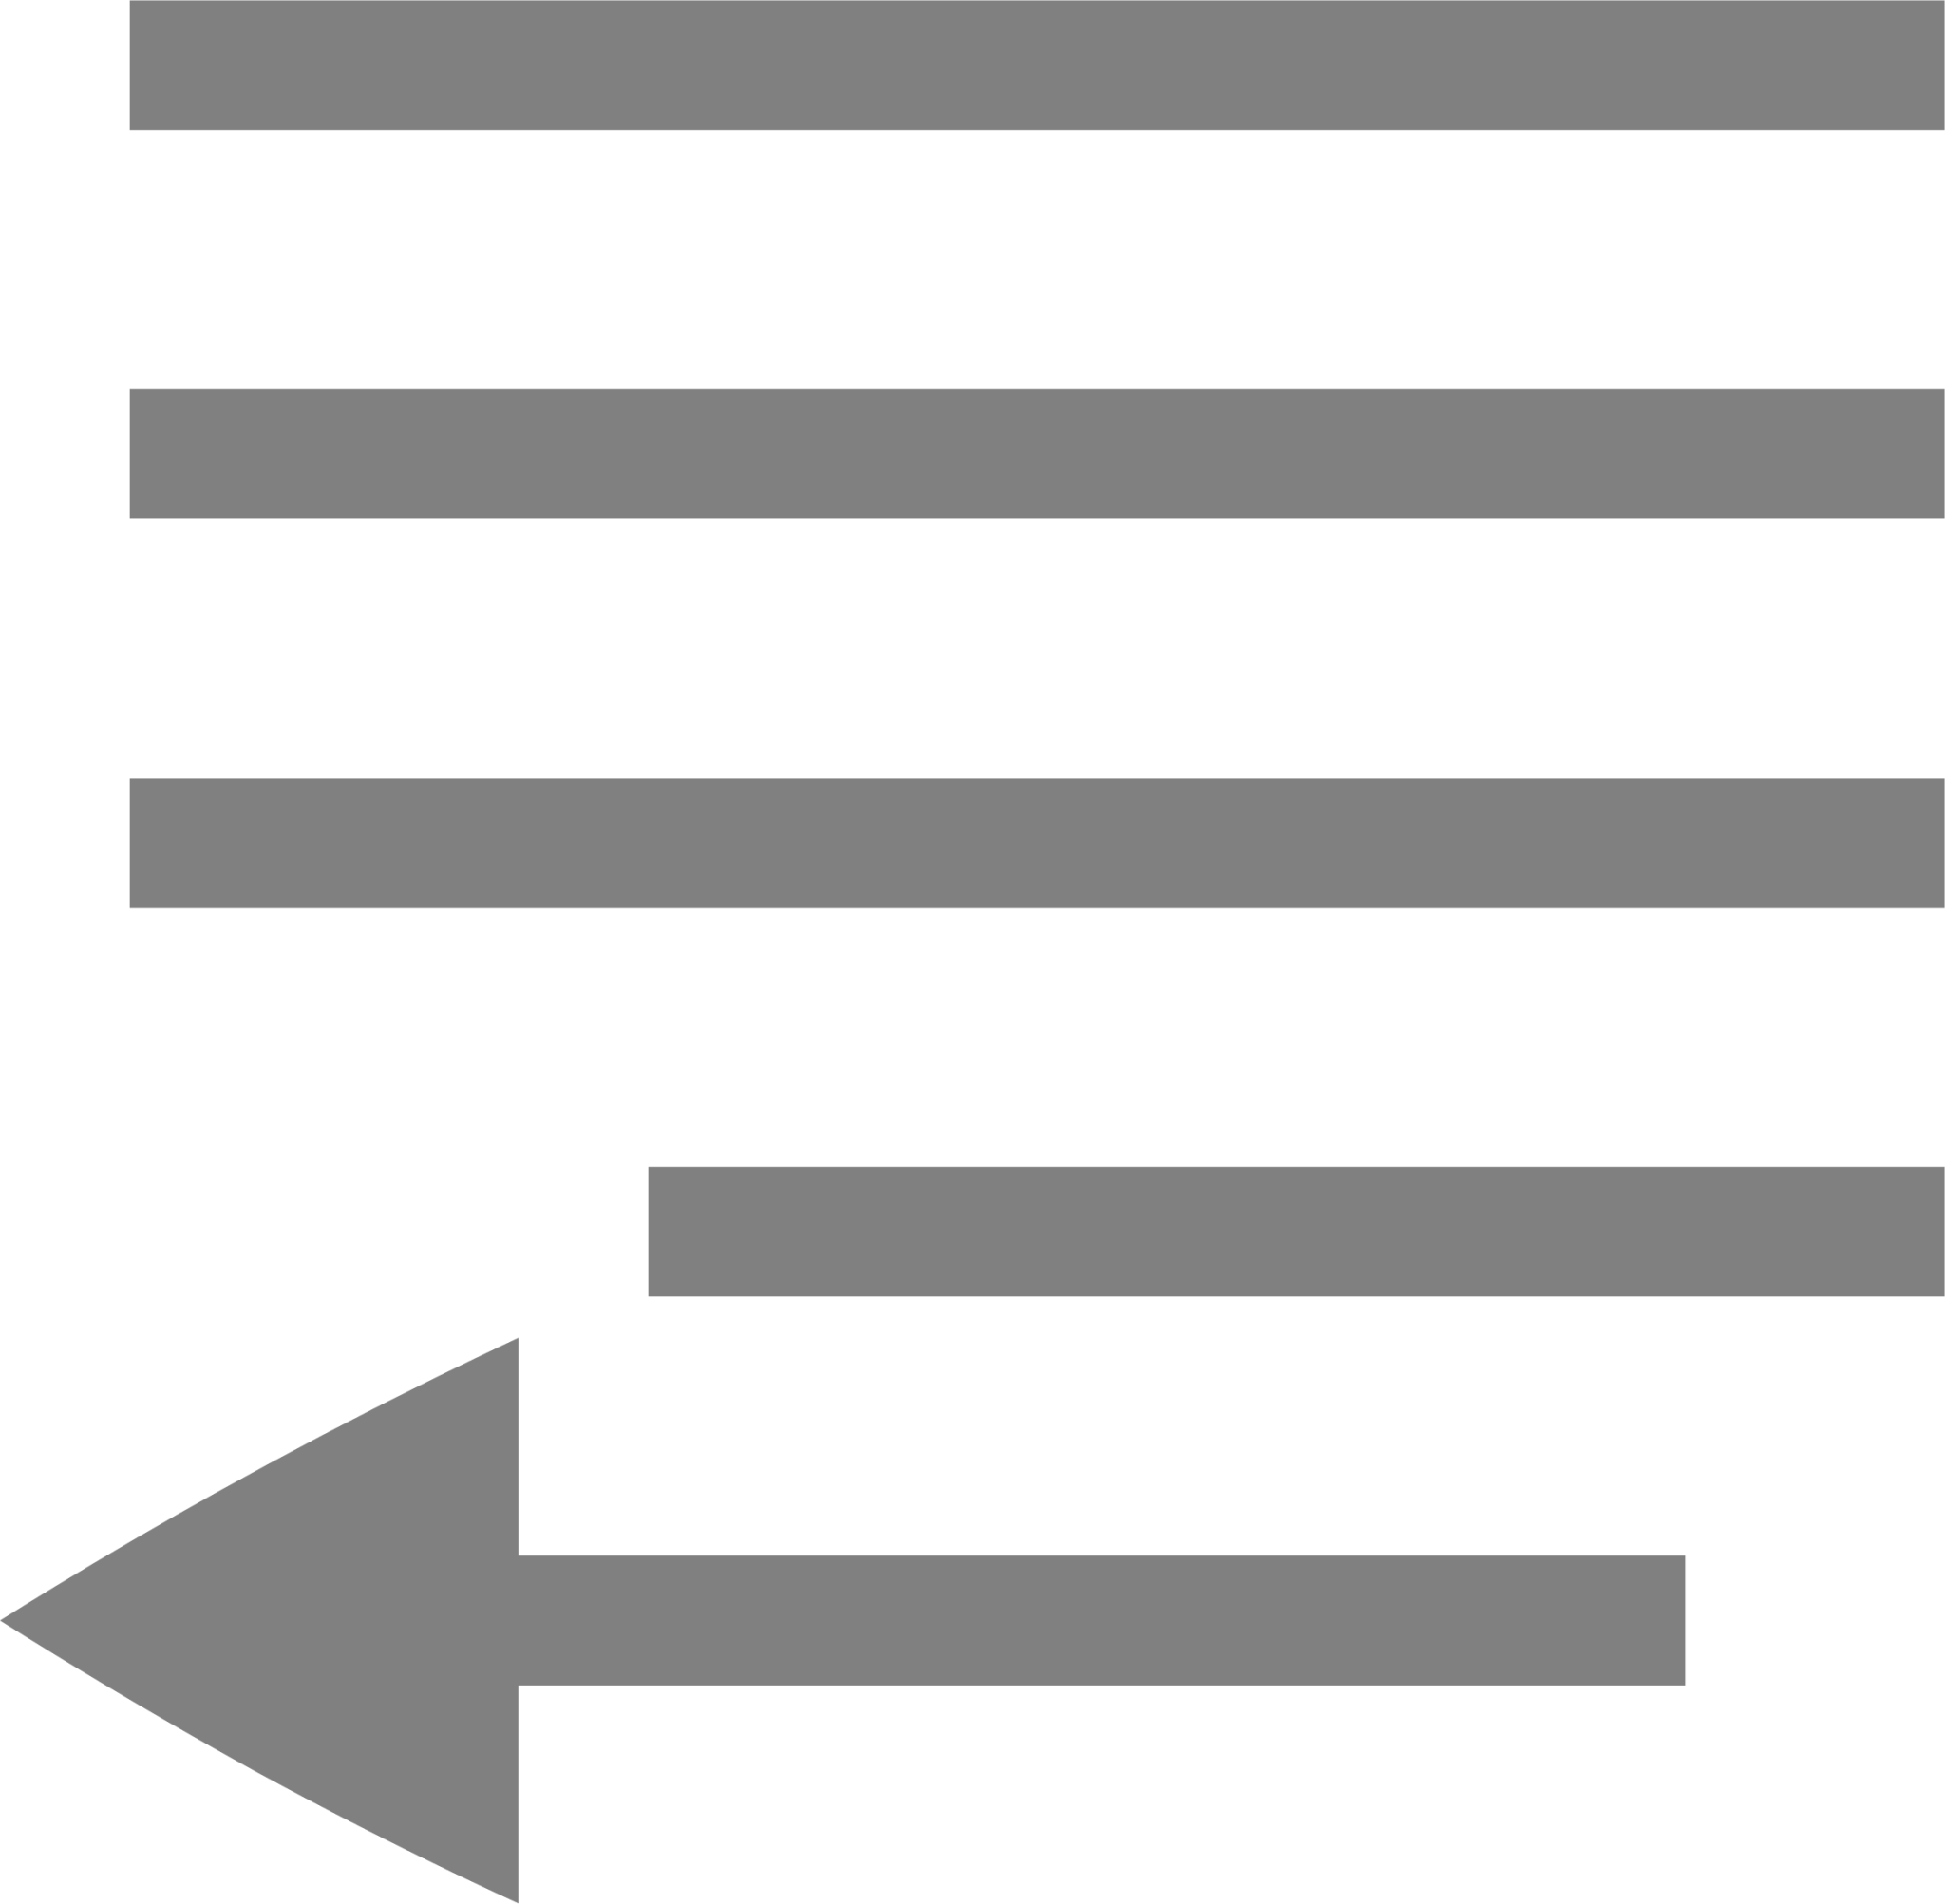 format text direction symbolic rtl icon